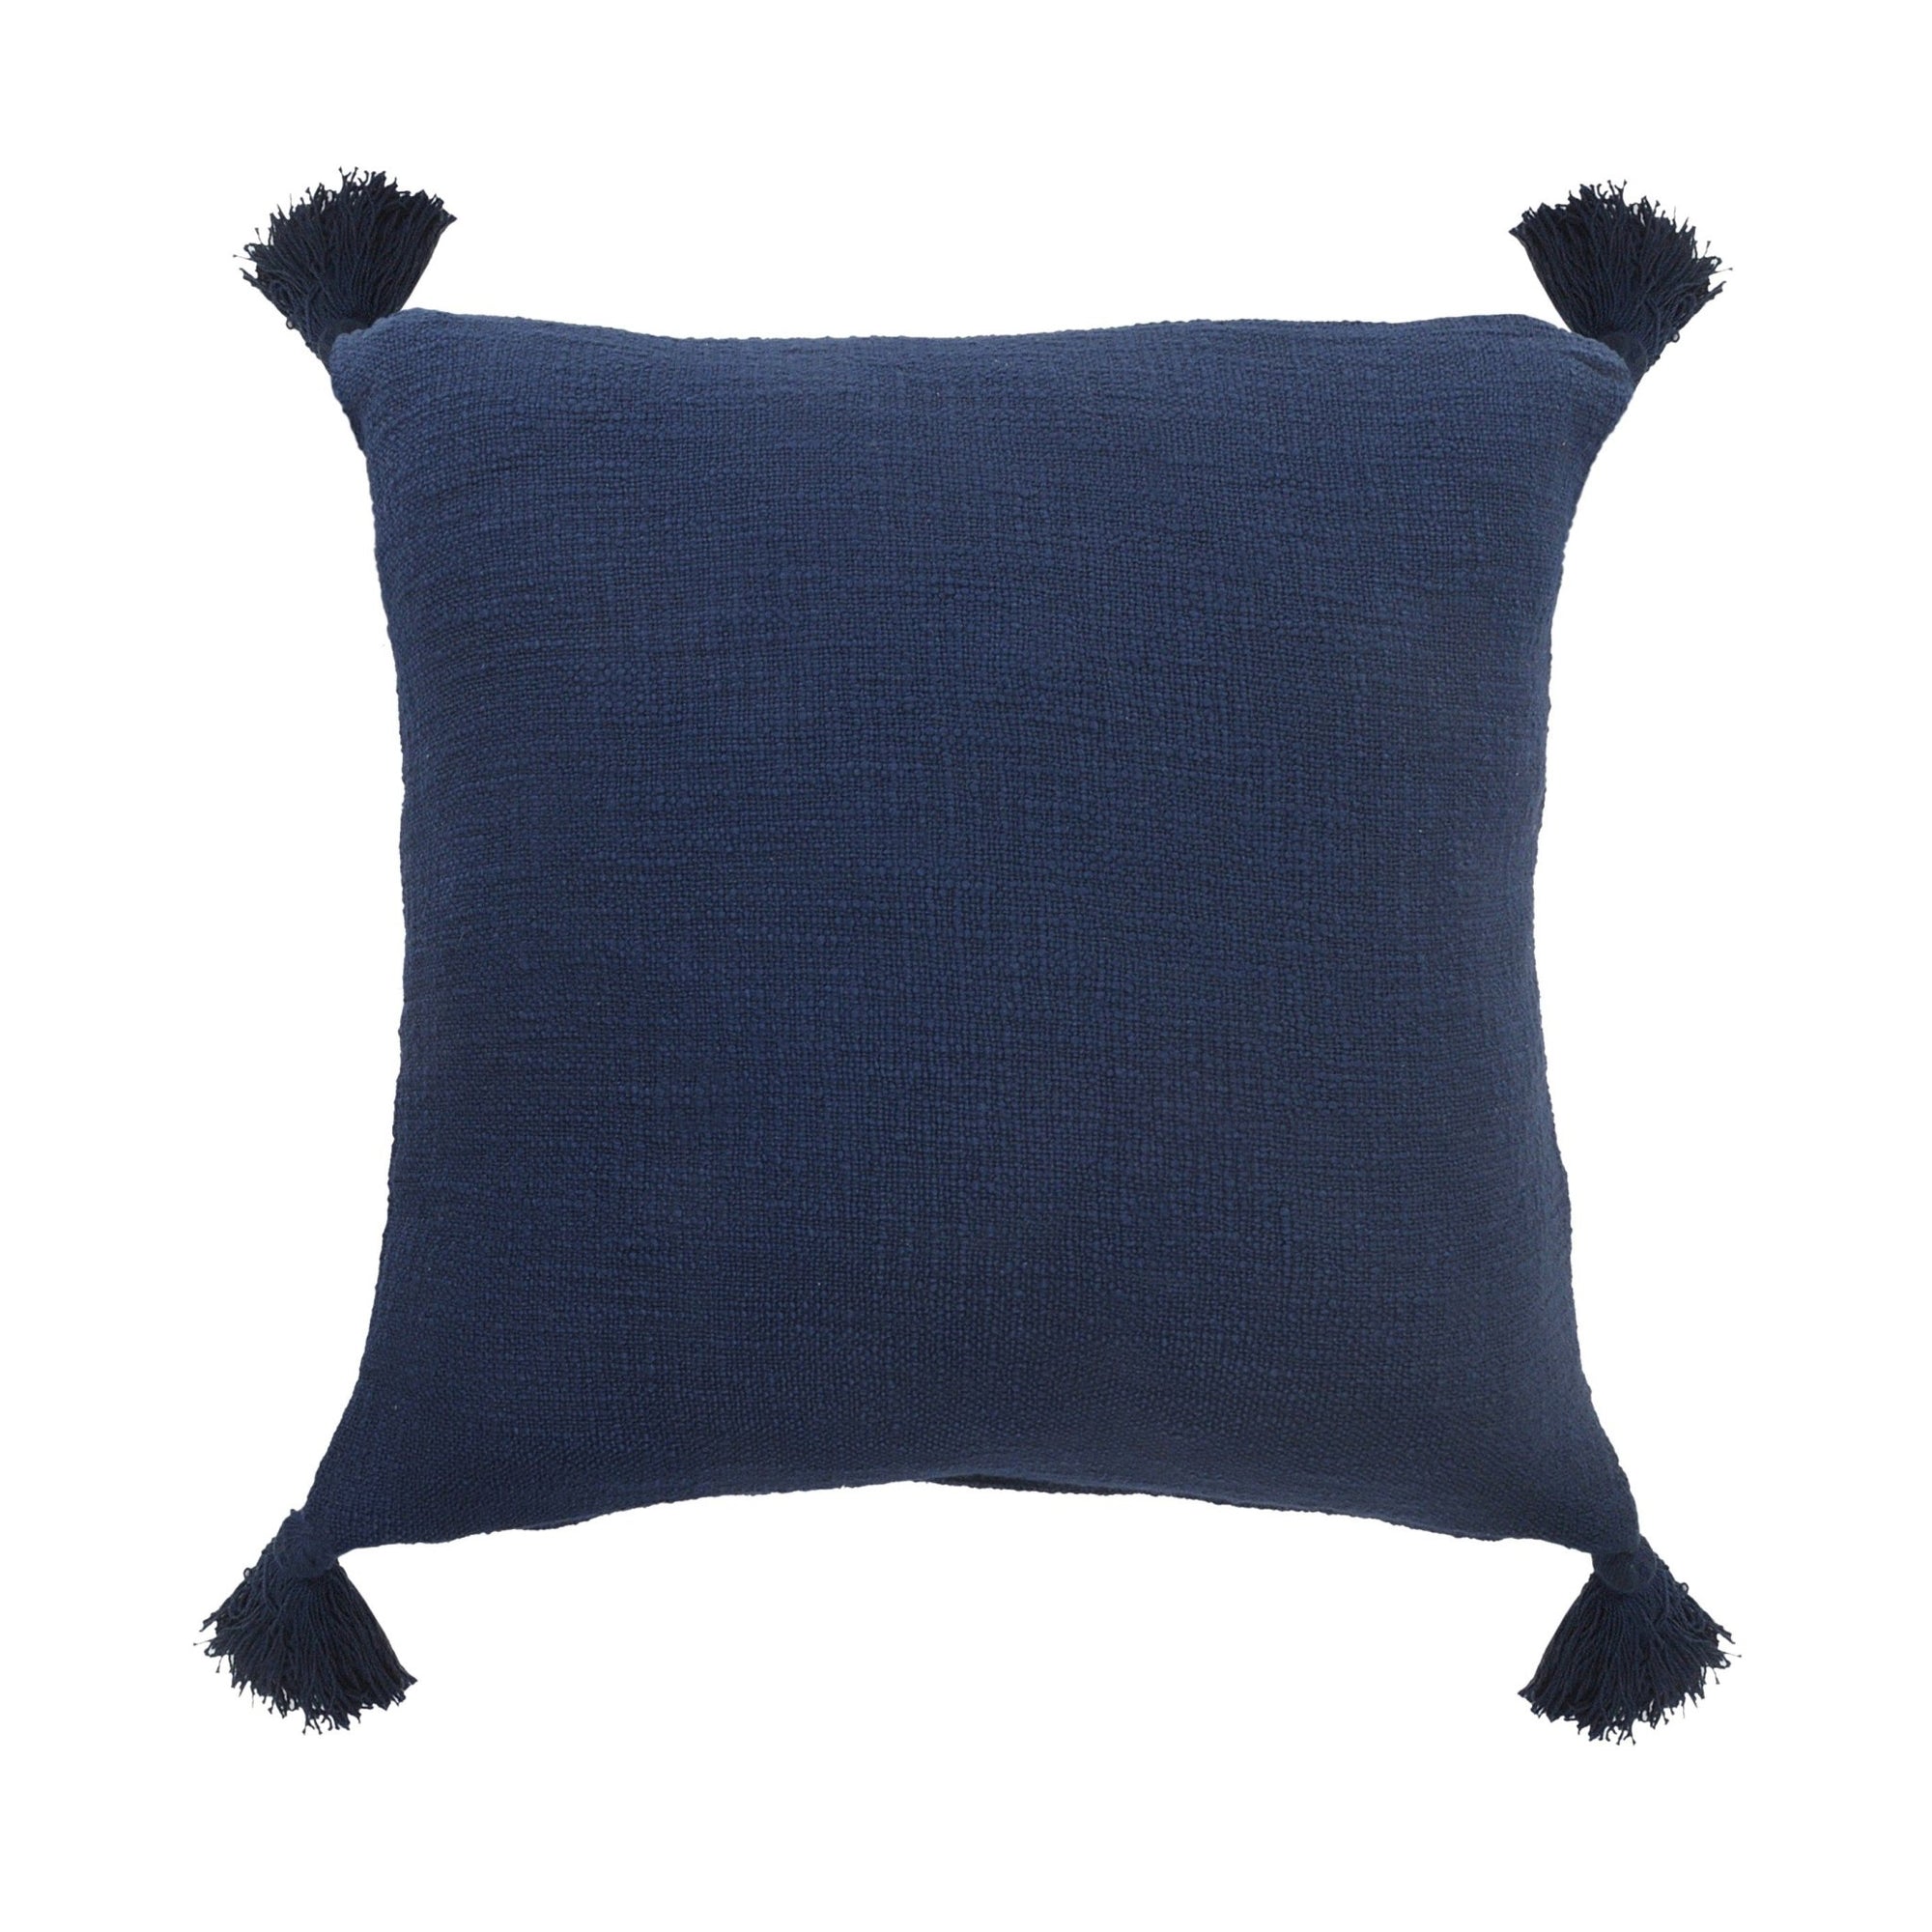 Insignia Lr07531 Navy Pillow - Rug & Home